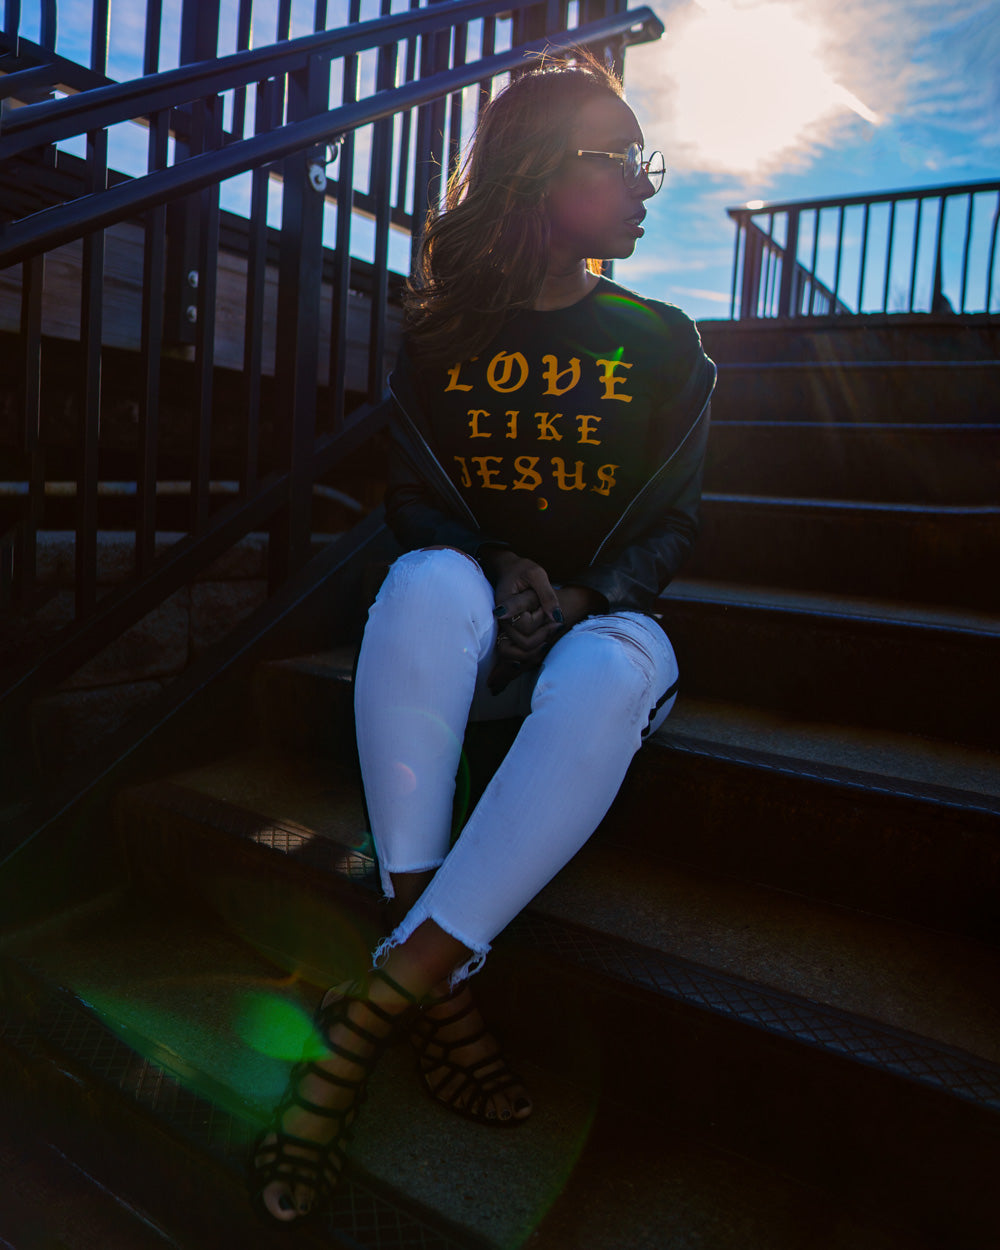 Love Like Jesus Adult Box T-Shirt